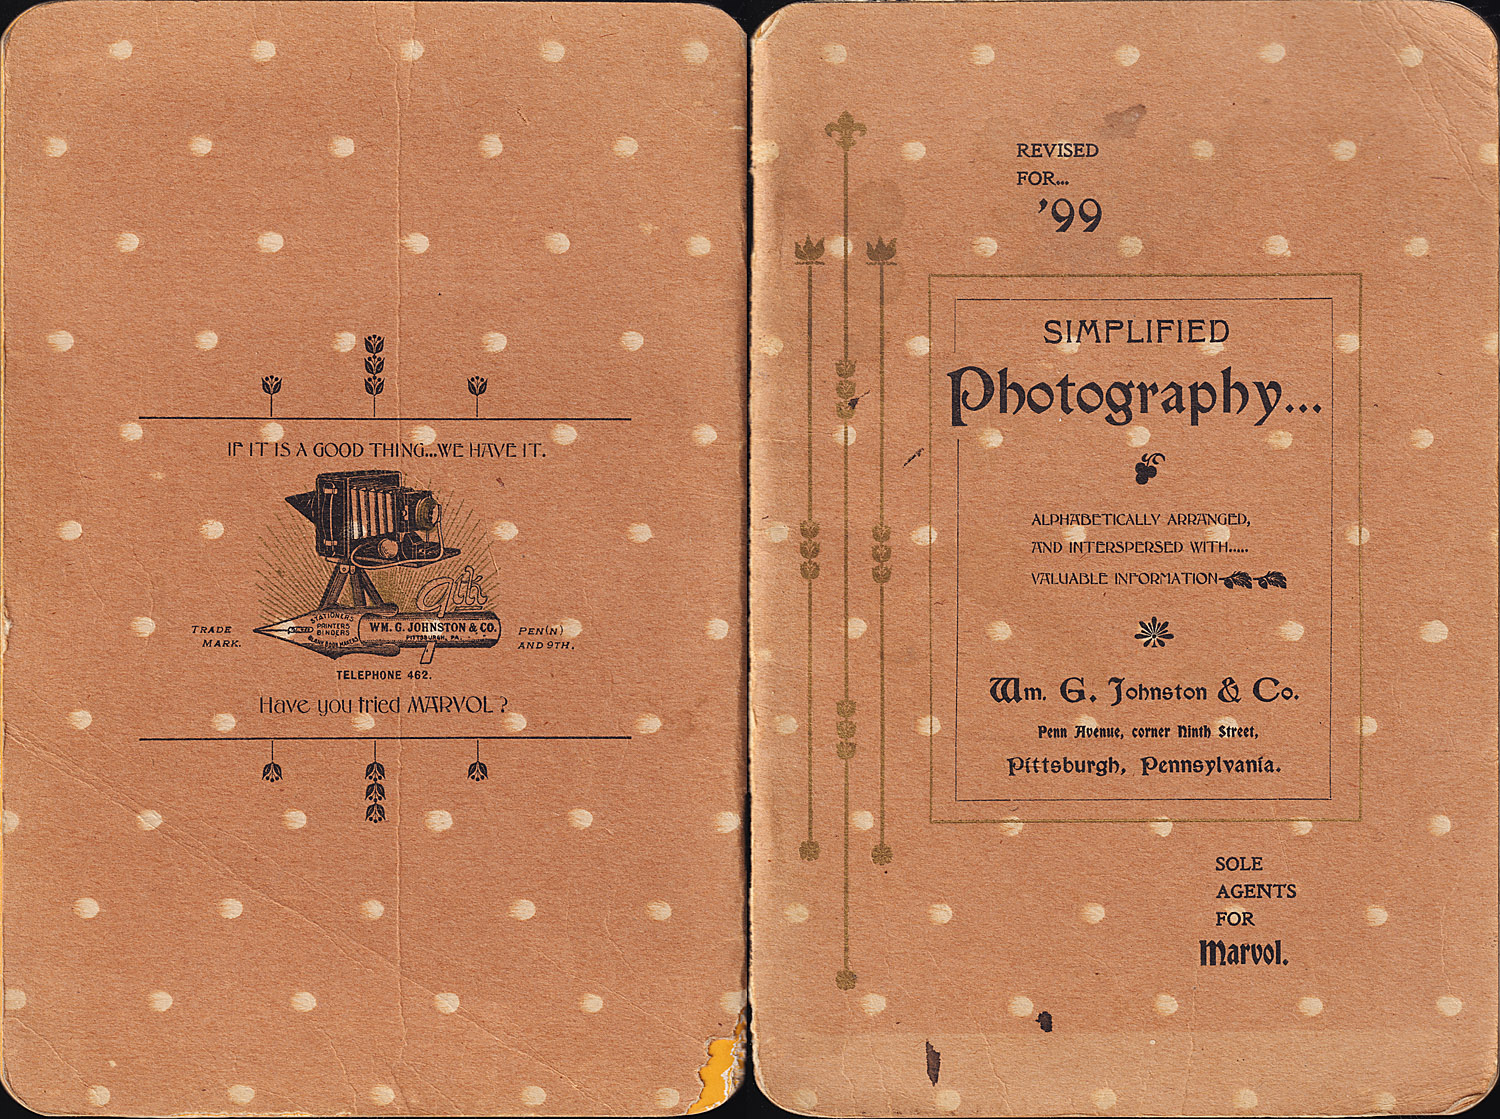 1359.wm.johnston&co.pittsburgh.1900-covers-1500.jpg